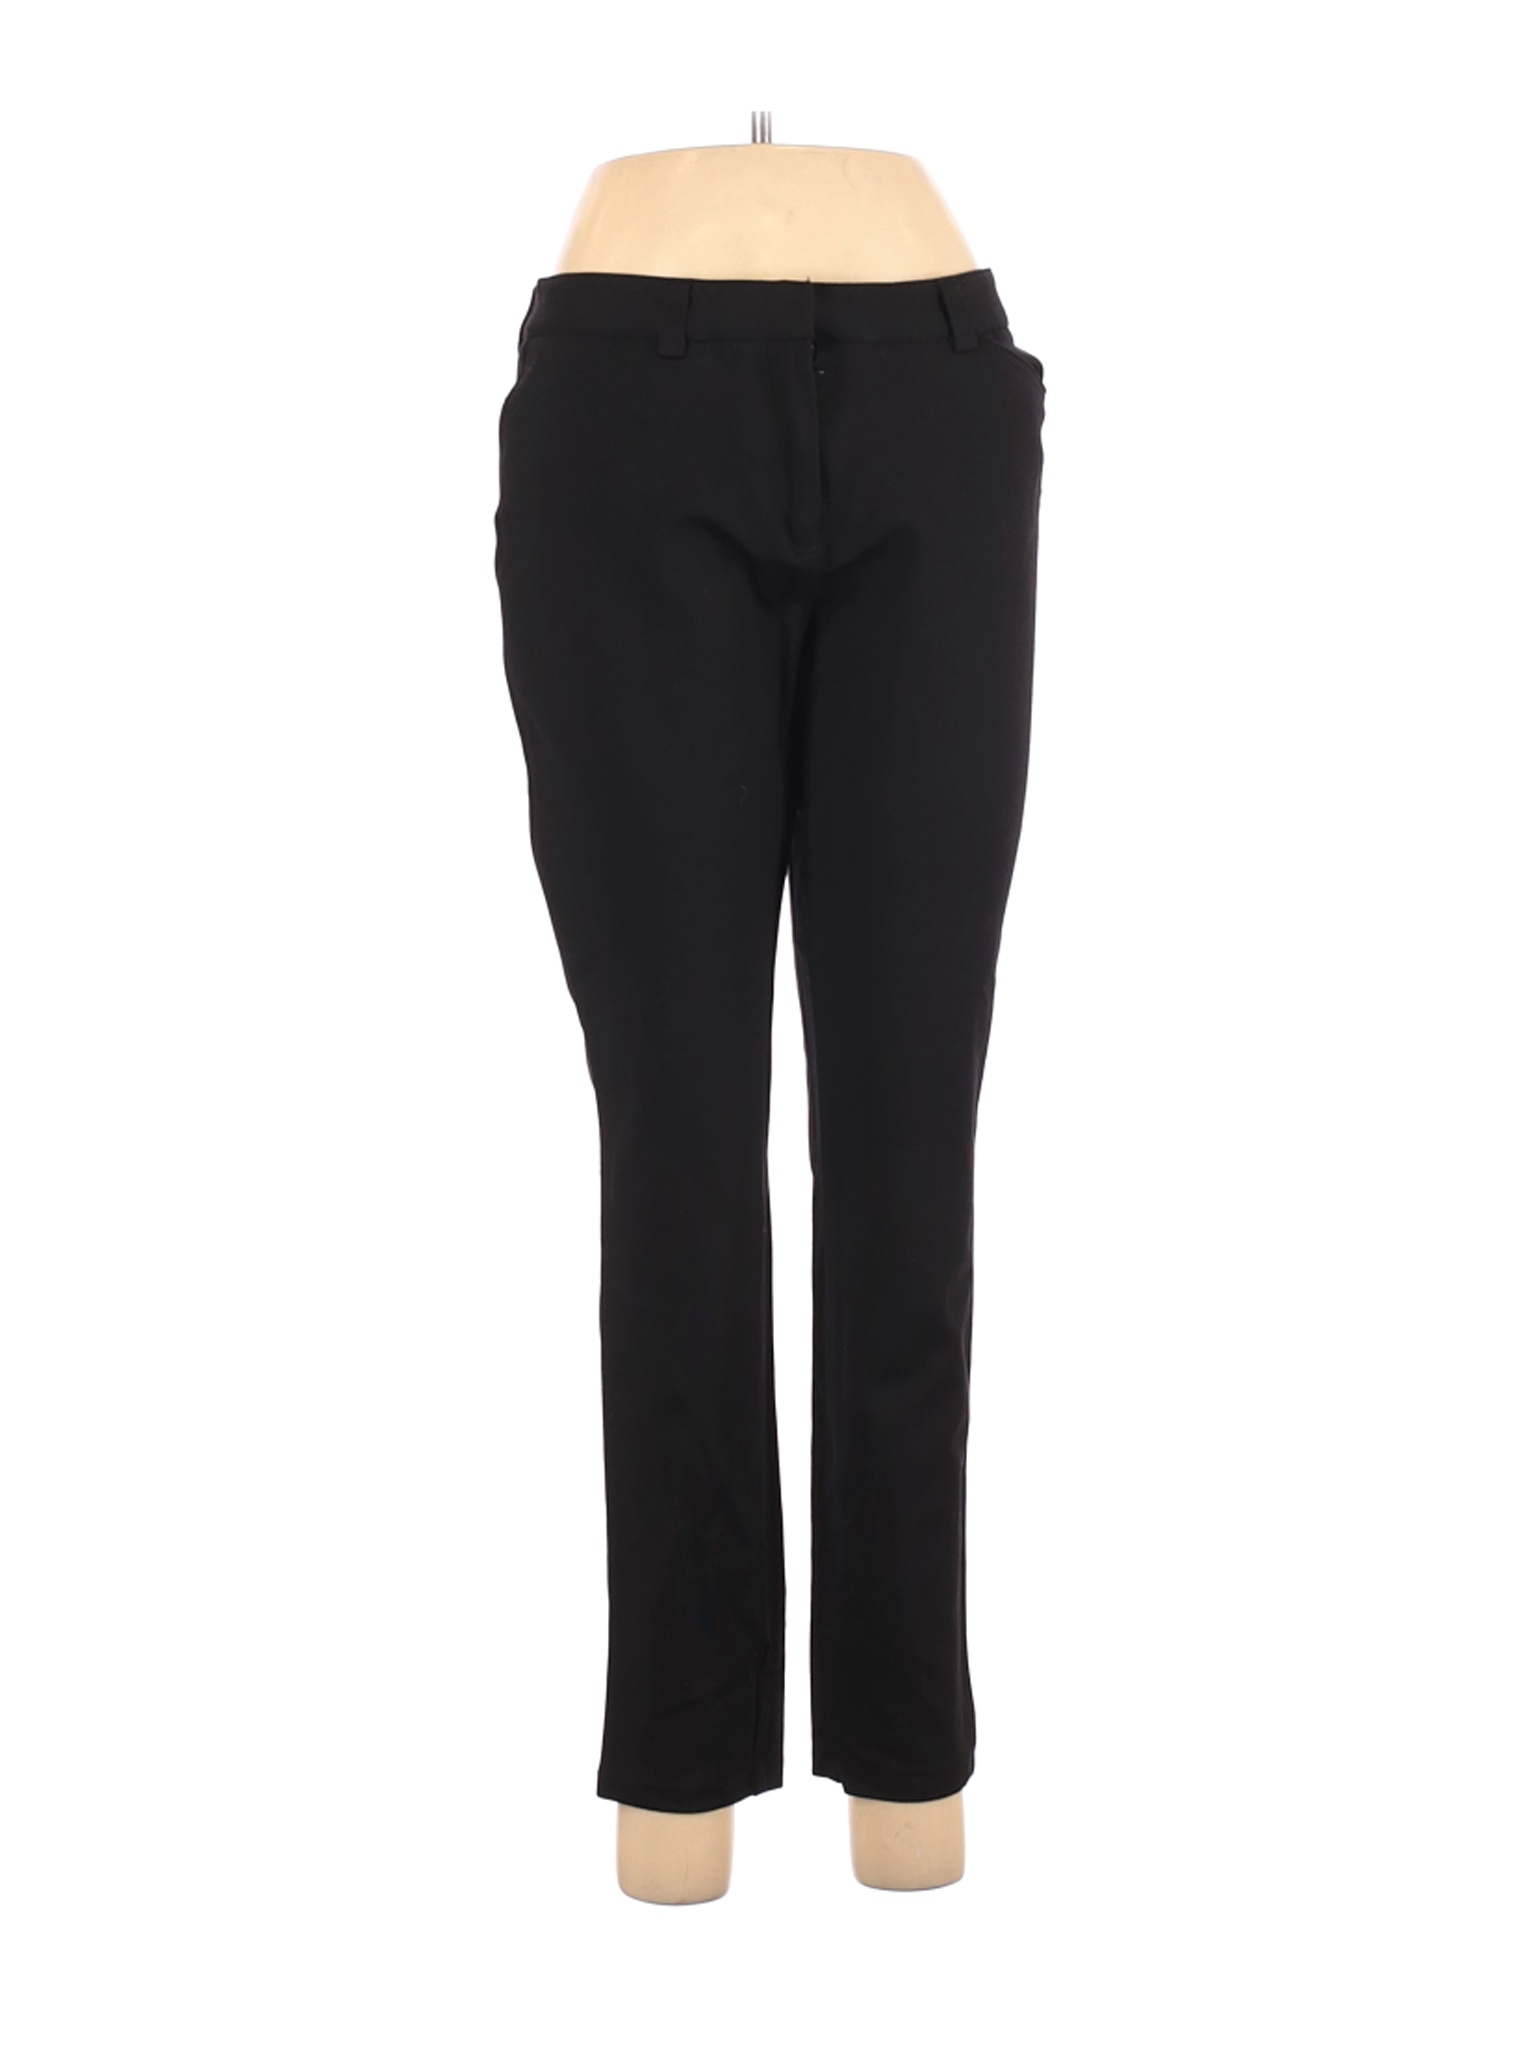 Andrew Marc Women Black Casual Pants 8 | eBay